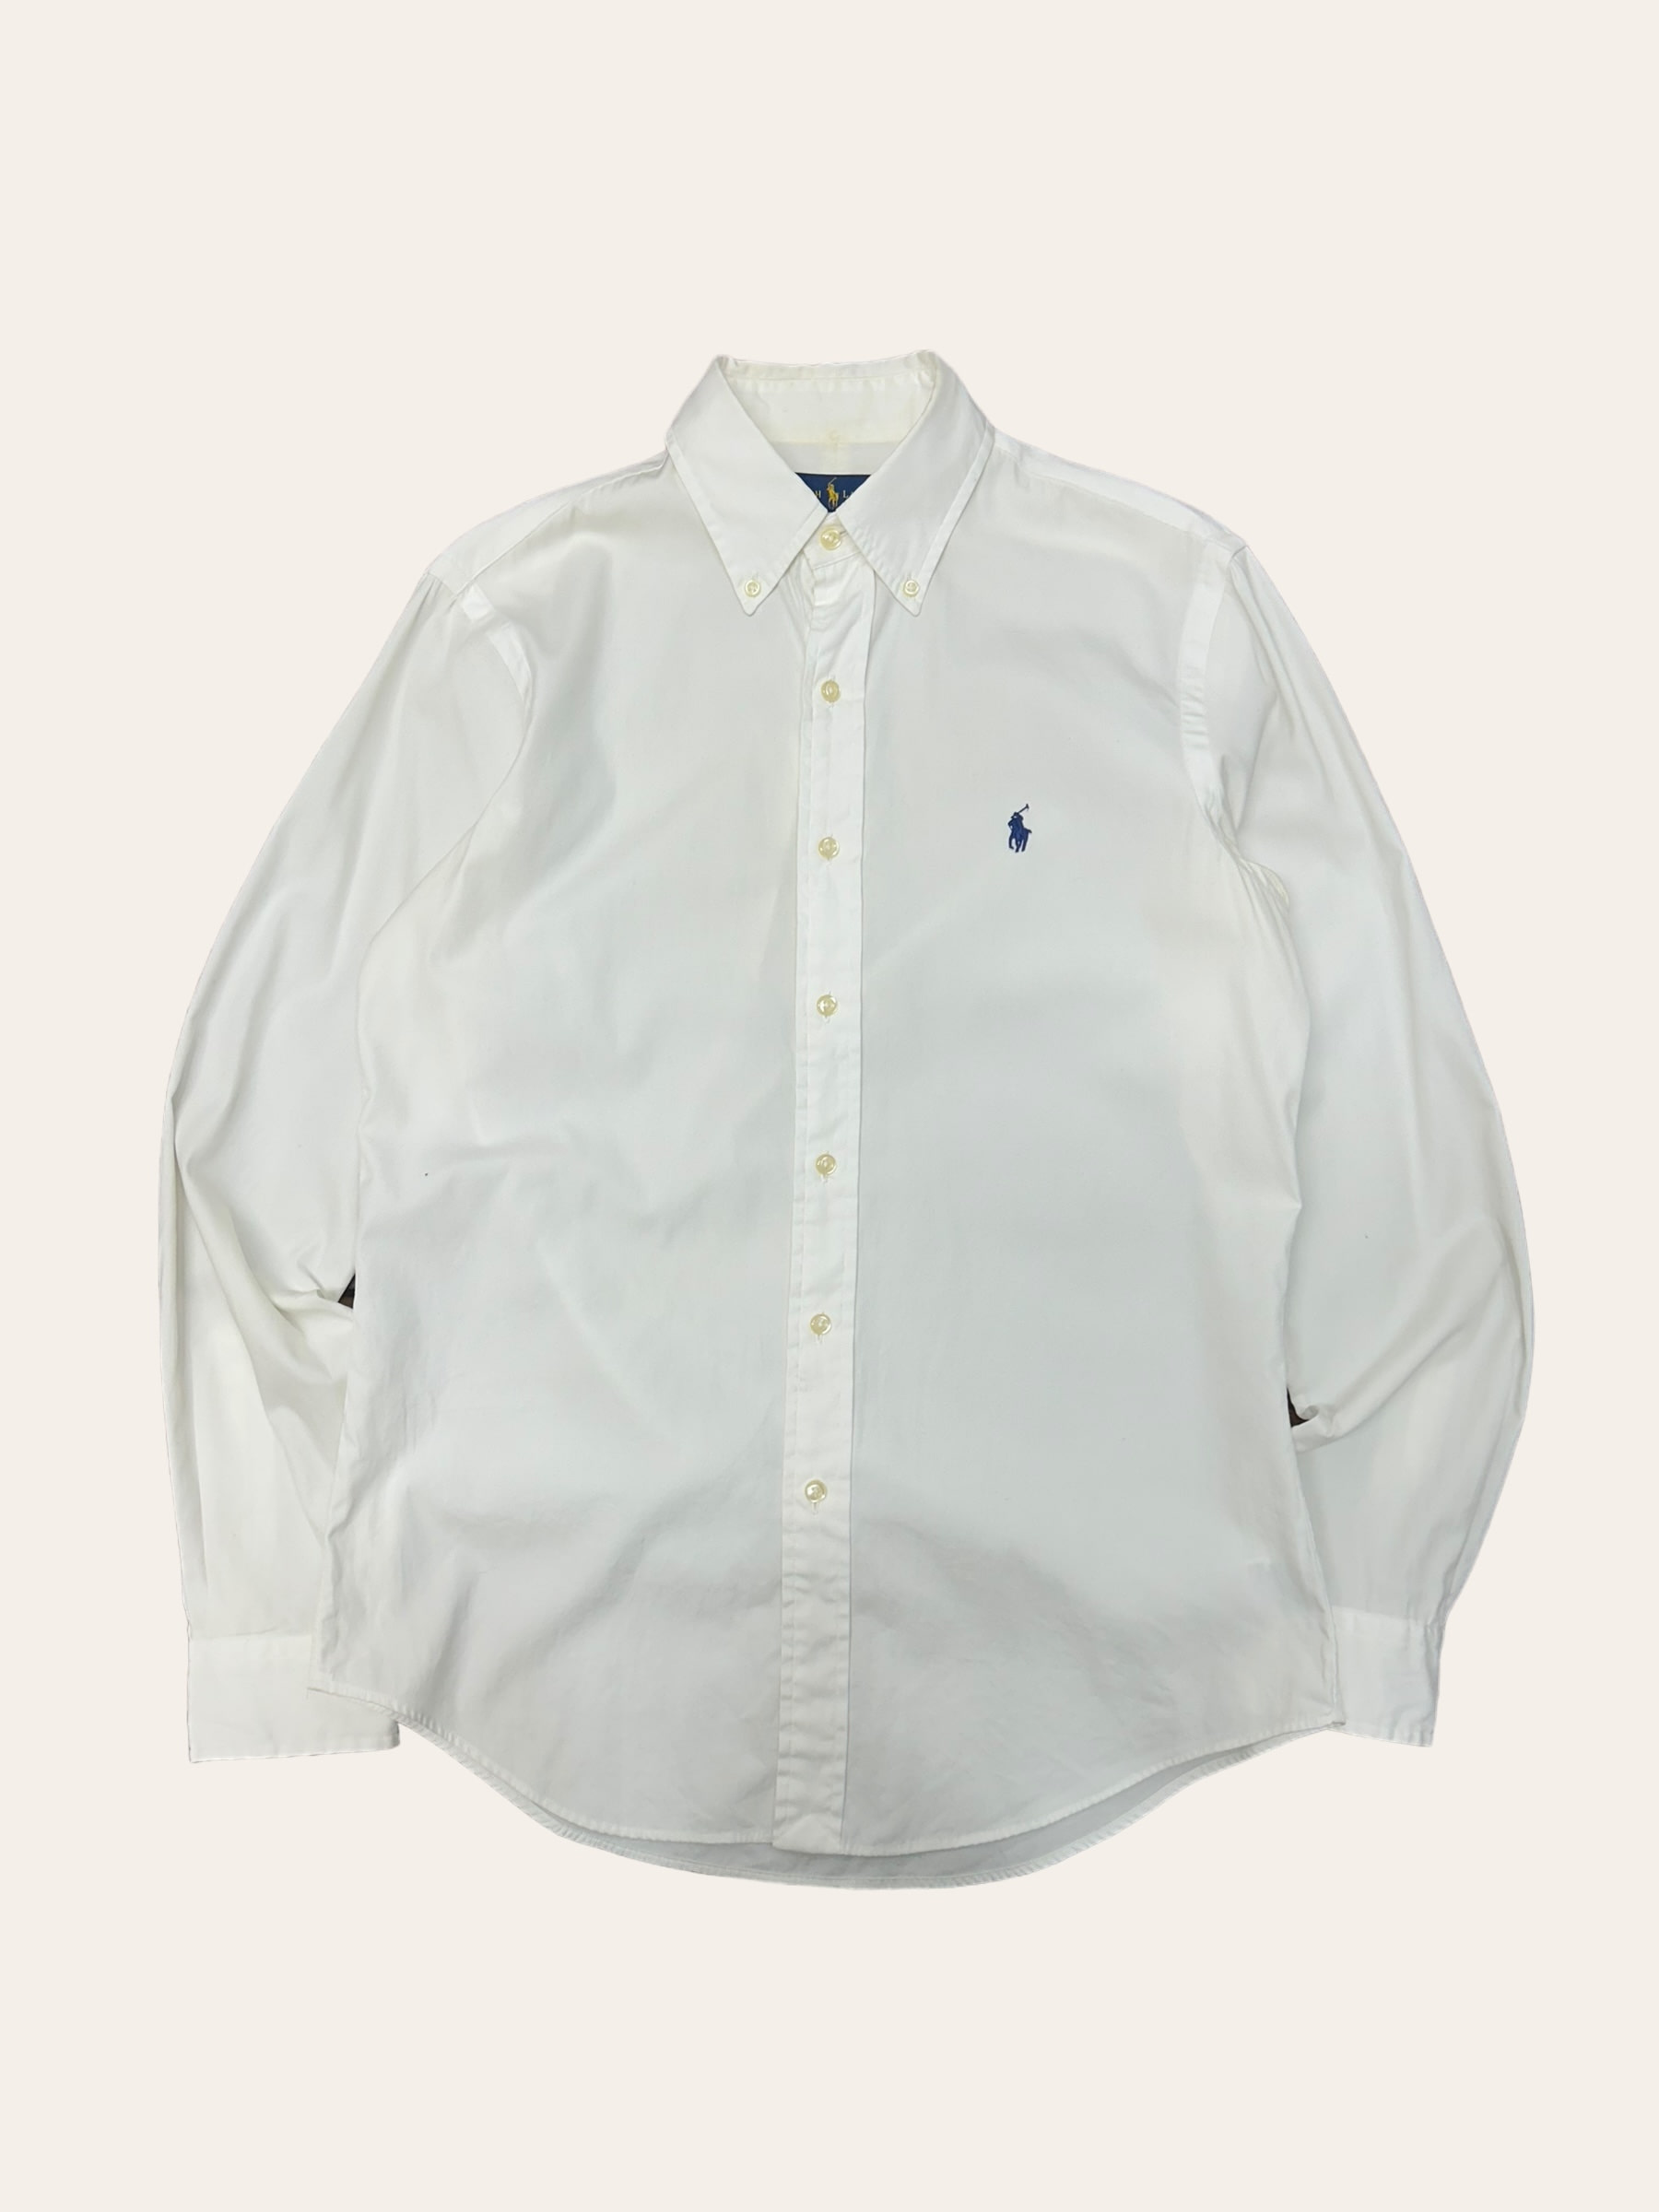 Polo ralph lauren white poplin shirt S